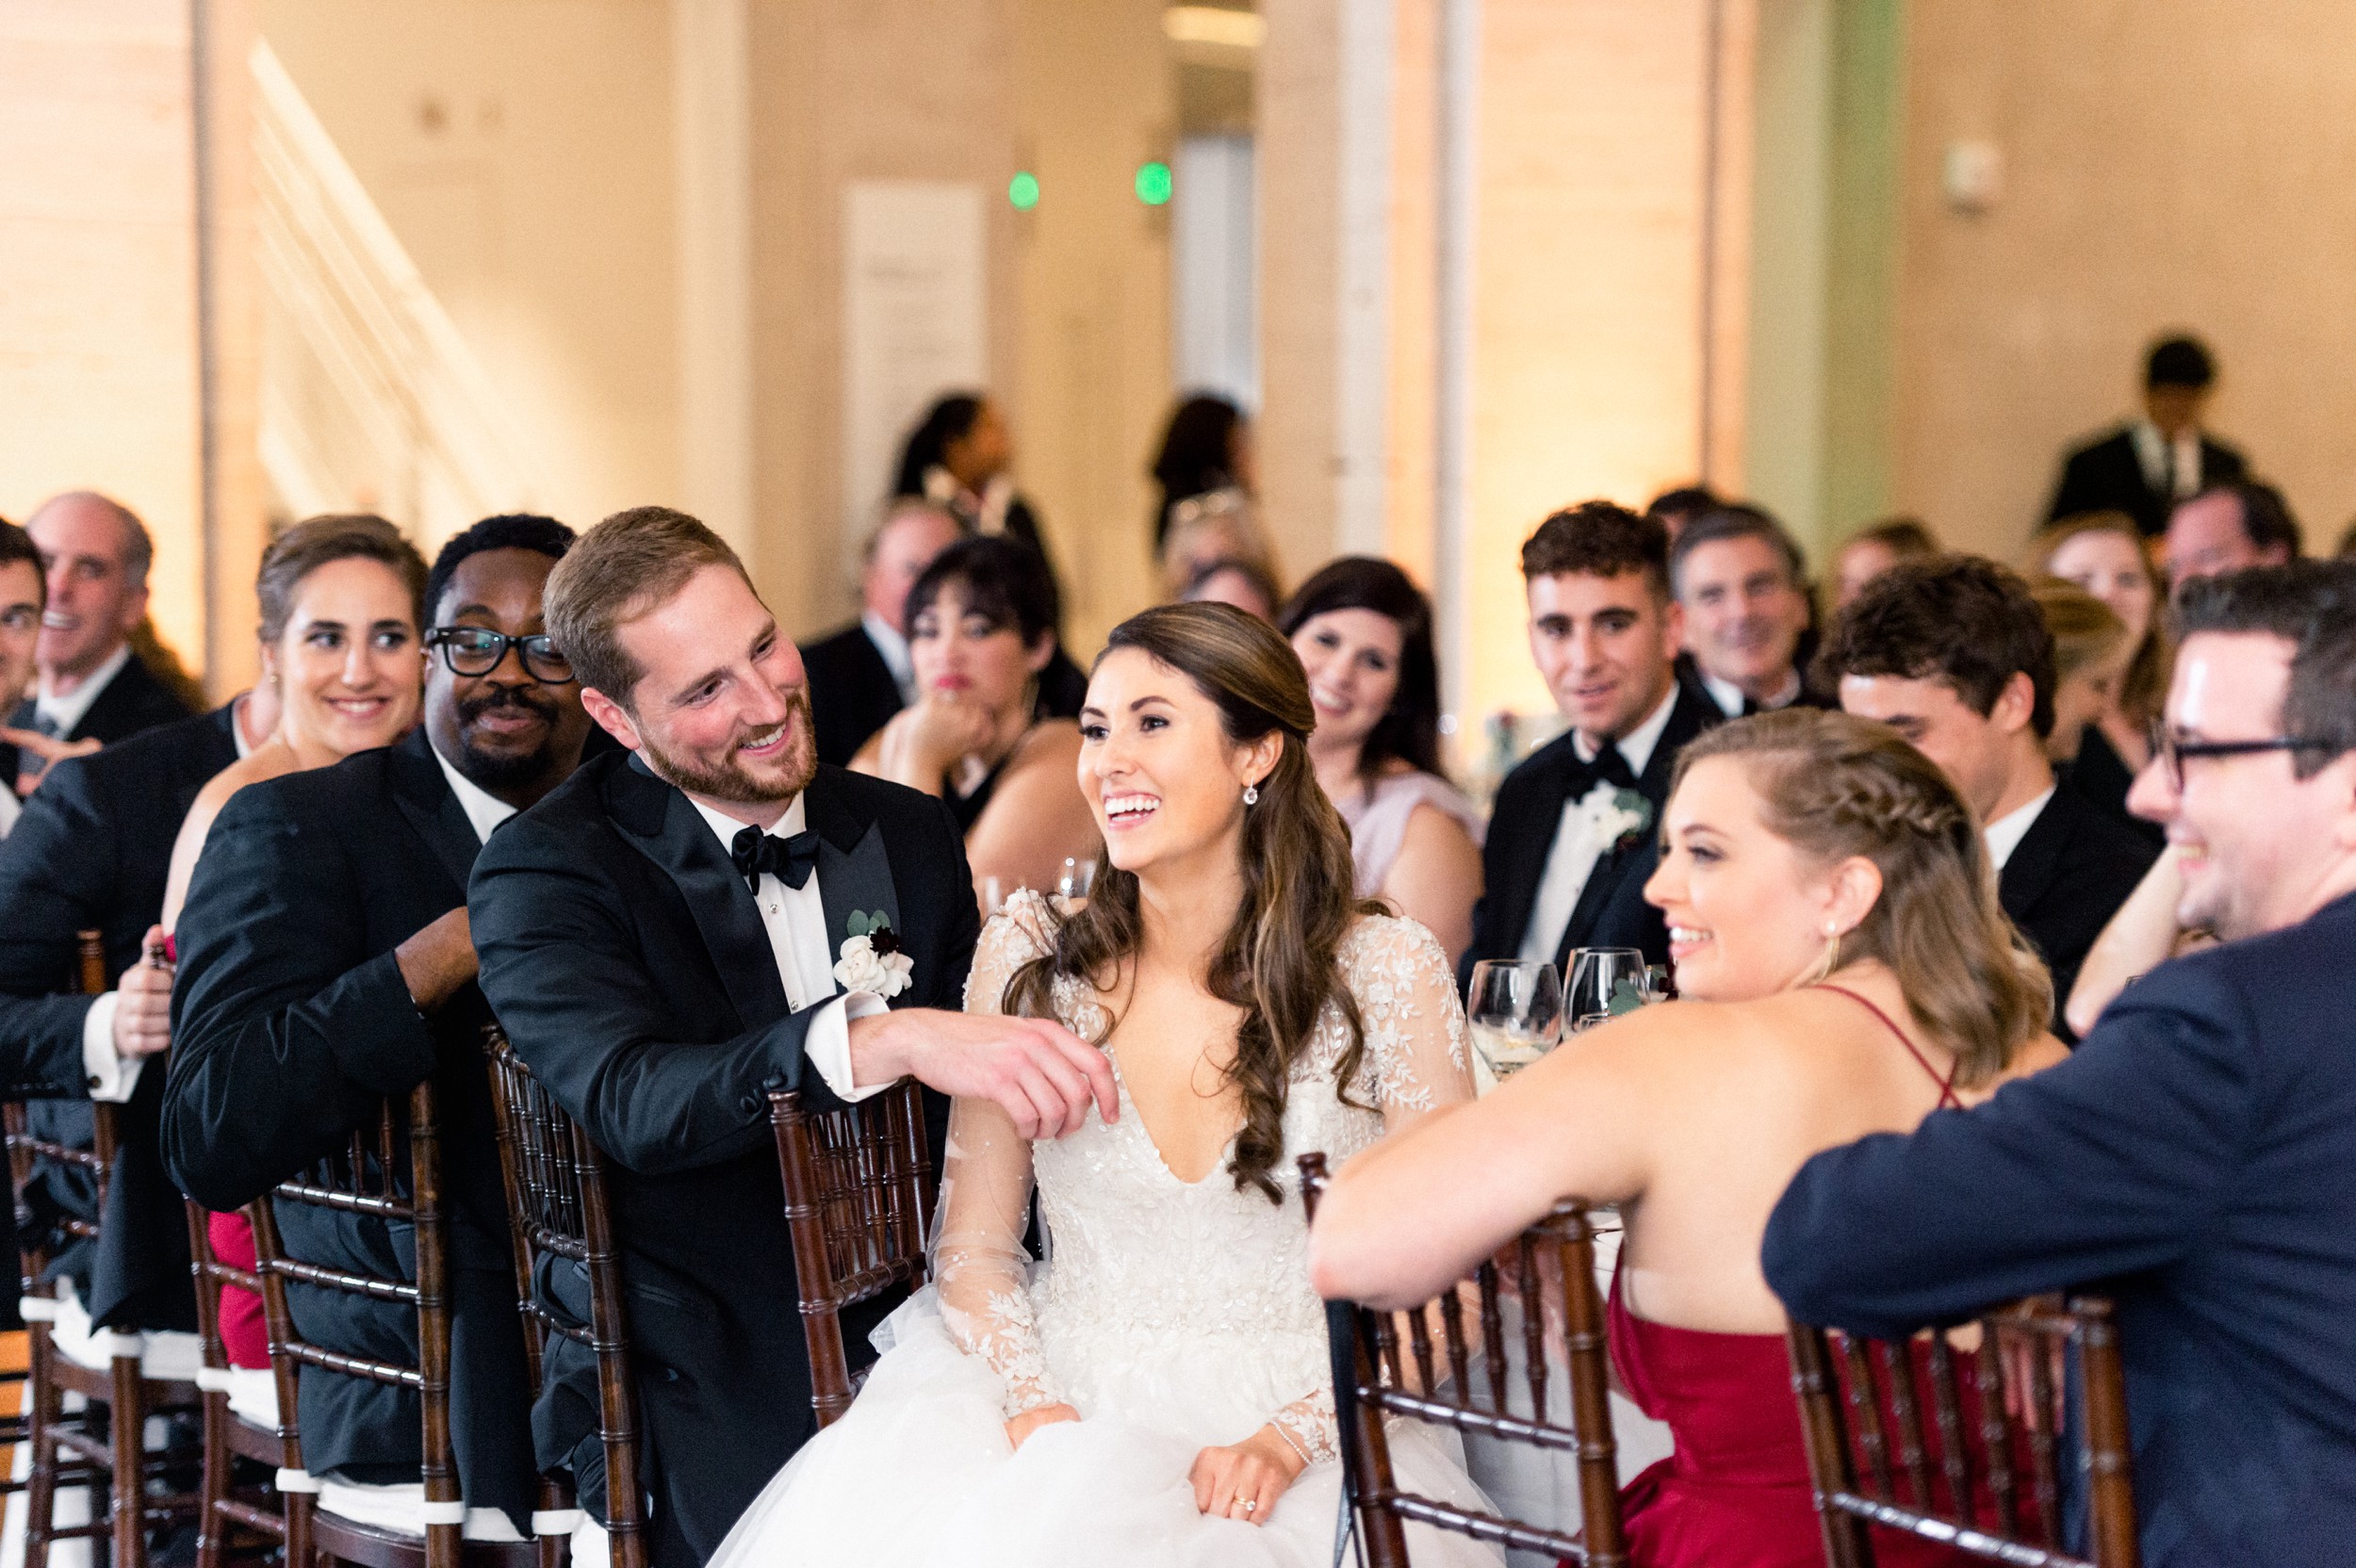 Harvard Art Museum Wedding Reception - toasts to the bride and groom